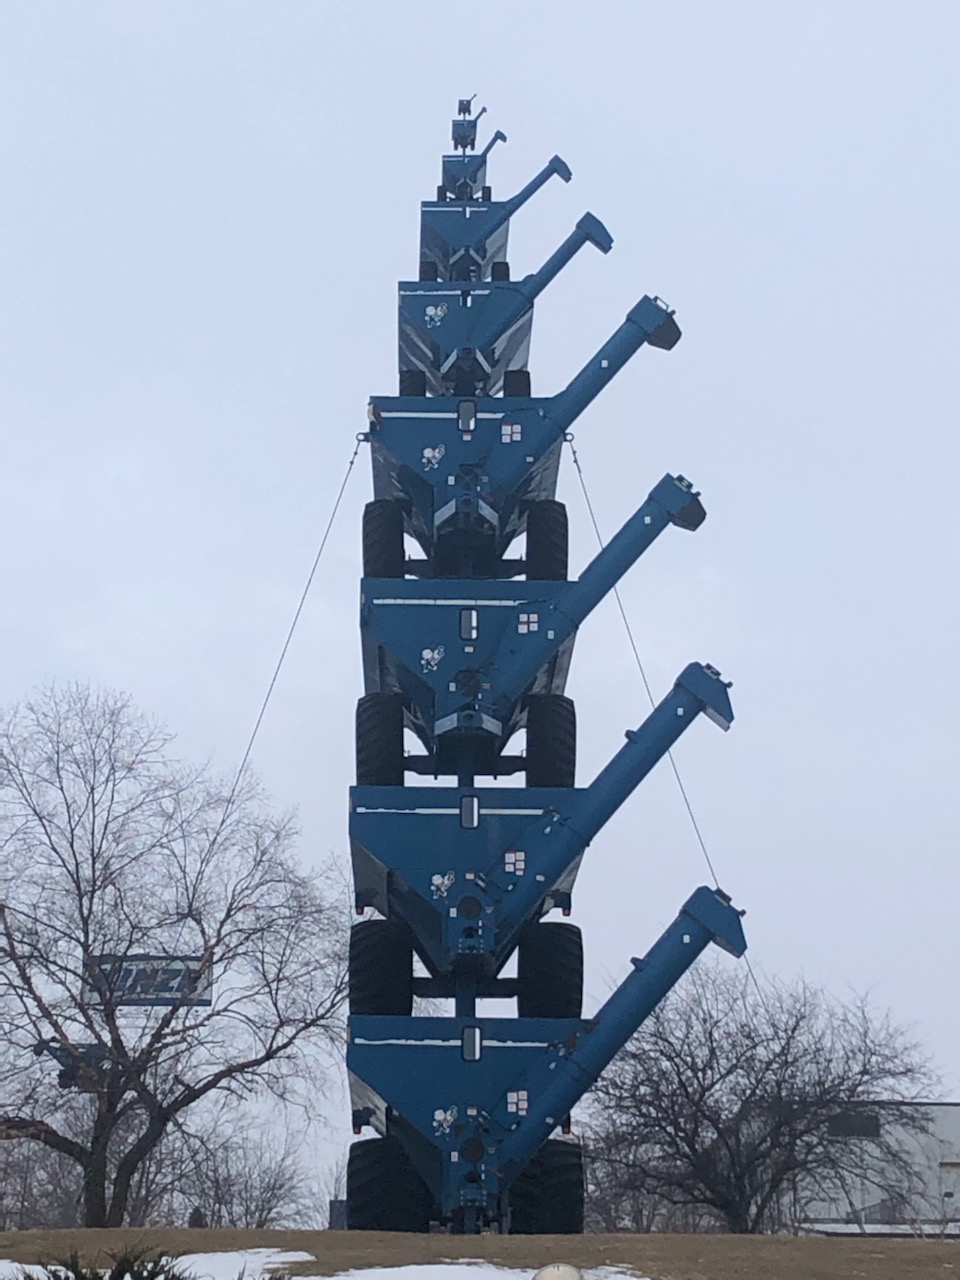 Tower of grain carts